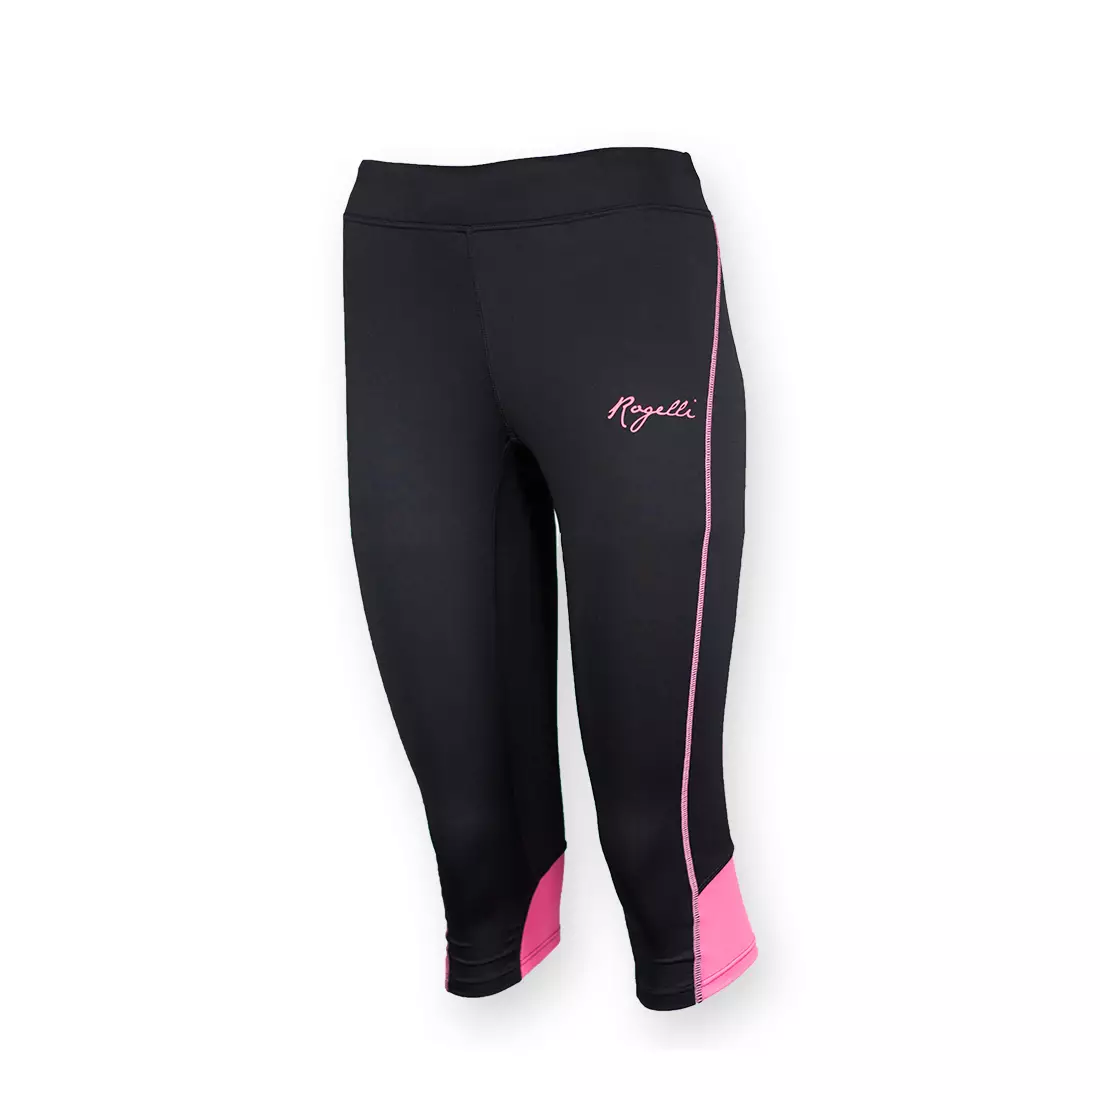 ROGELLI SUEZ dámské běžecké šortky 840.742, 3/4 nohavice, černo-růžové